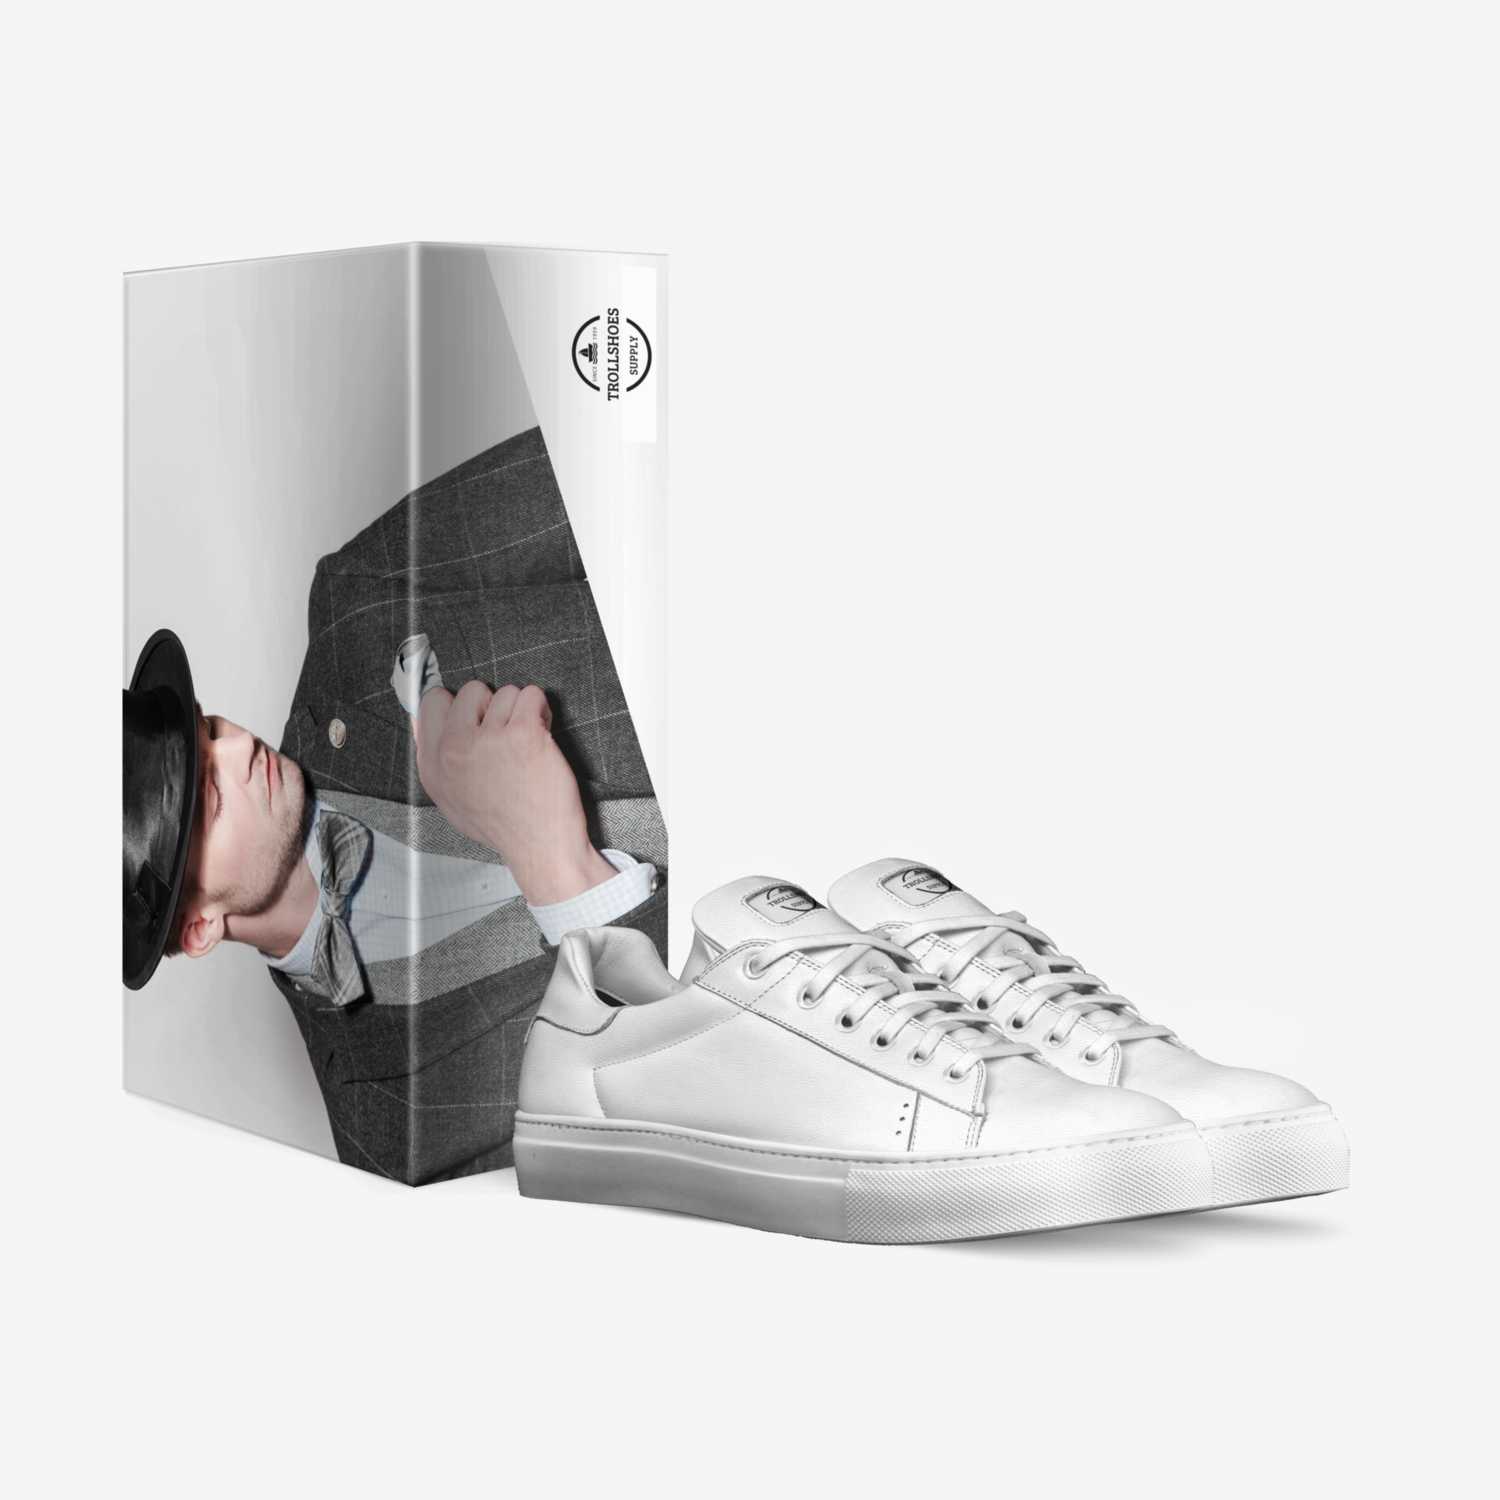 TrollShoes custom made in Italy shoes by Volodymyr Nazarko | Box view